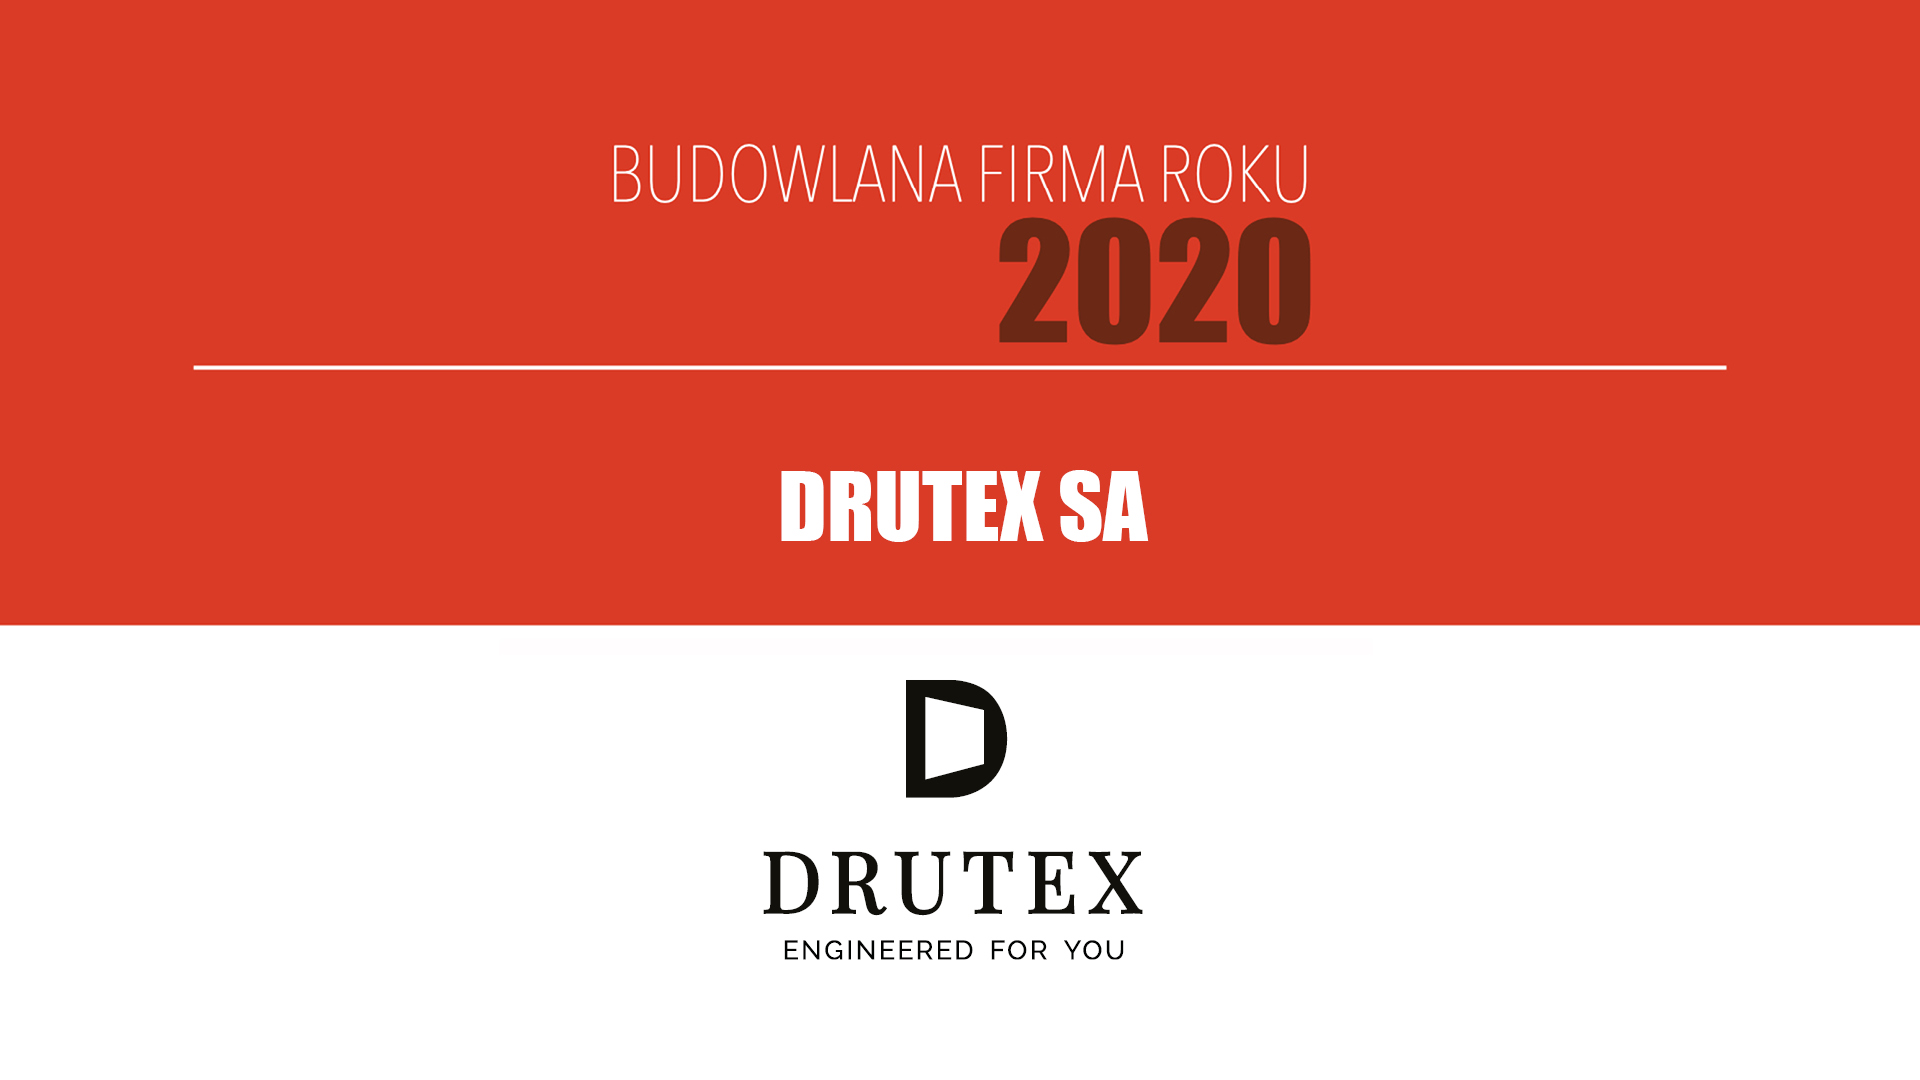 DRUTEX SA – Budowlana Firma Roku 2020